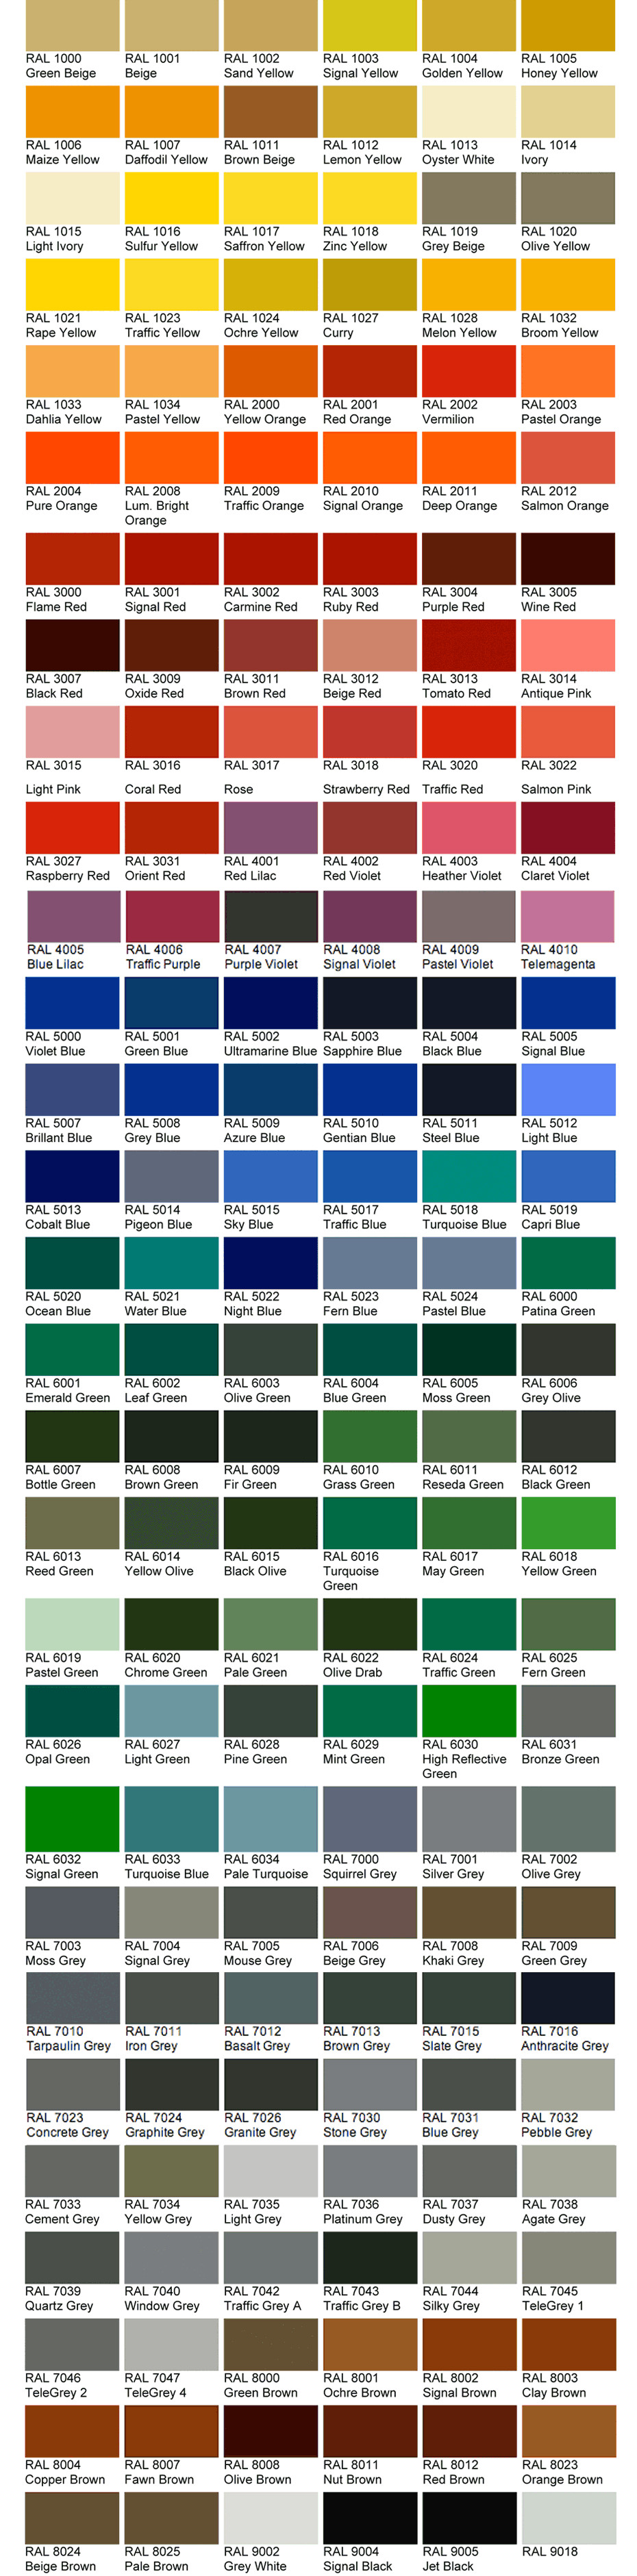 Best ideas about Matching Paint Colors
. Save or Pin Aluminum Folding Patio Doors Panoramic Doors Now.